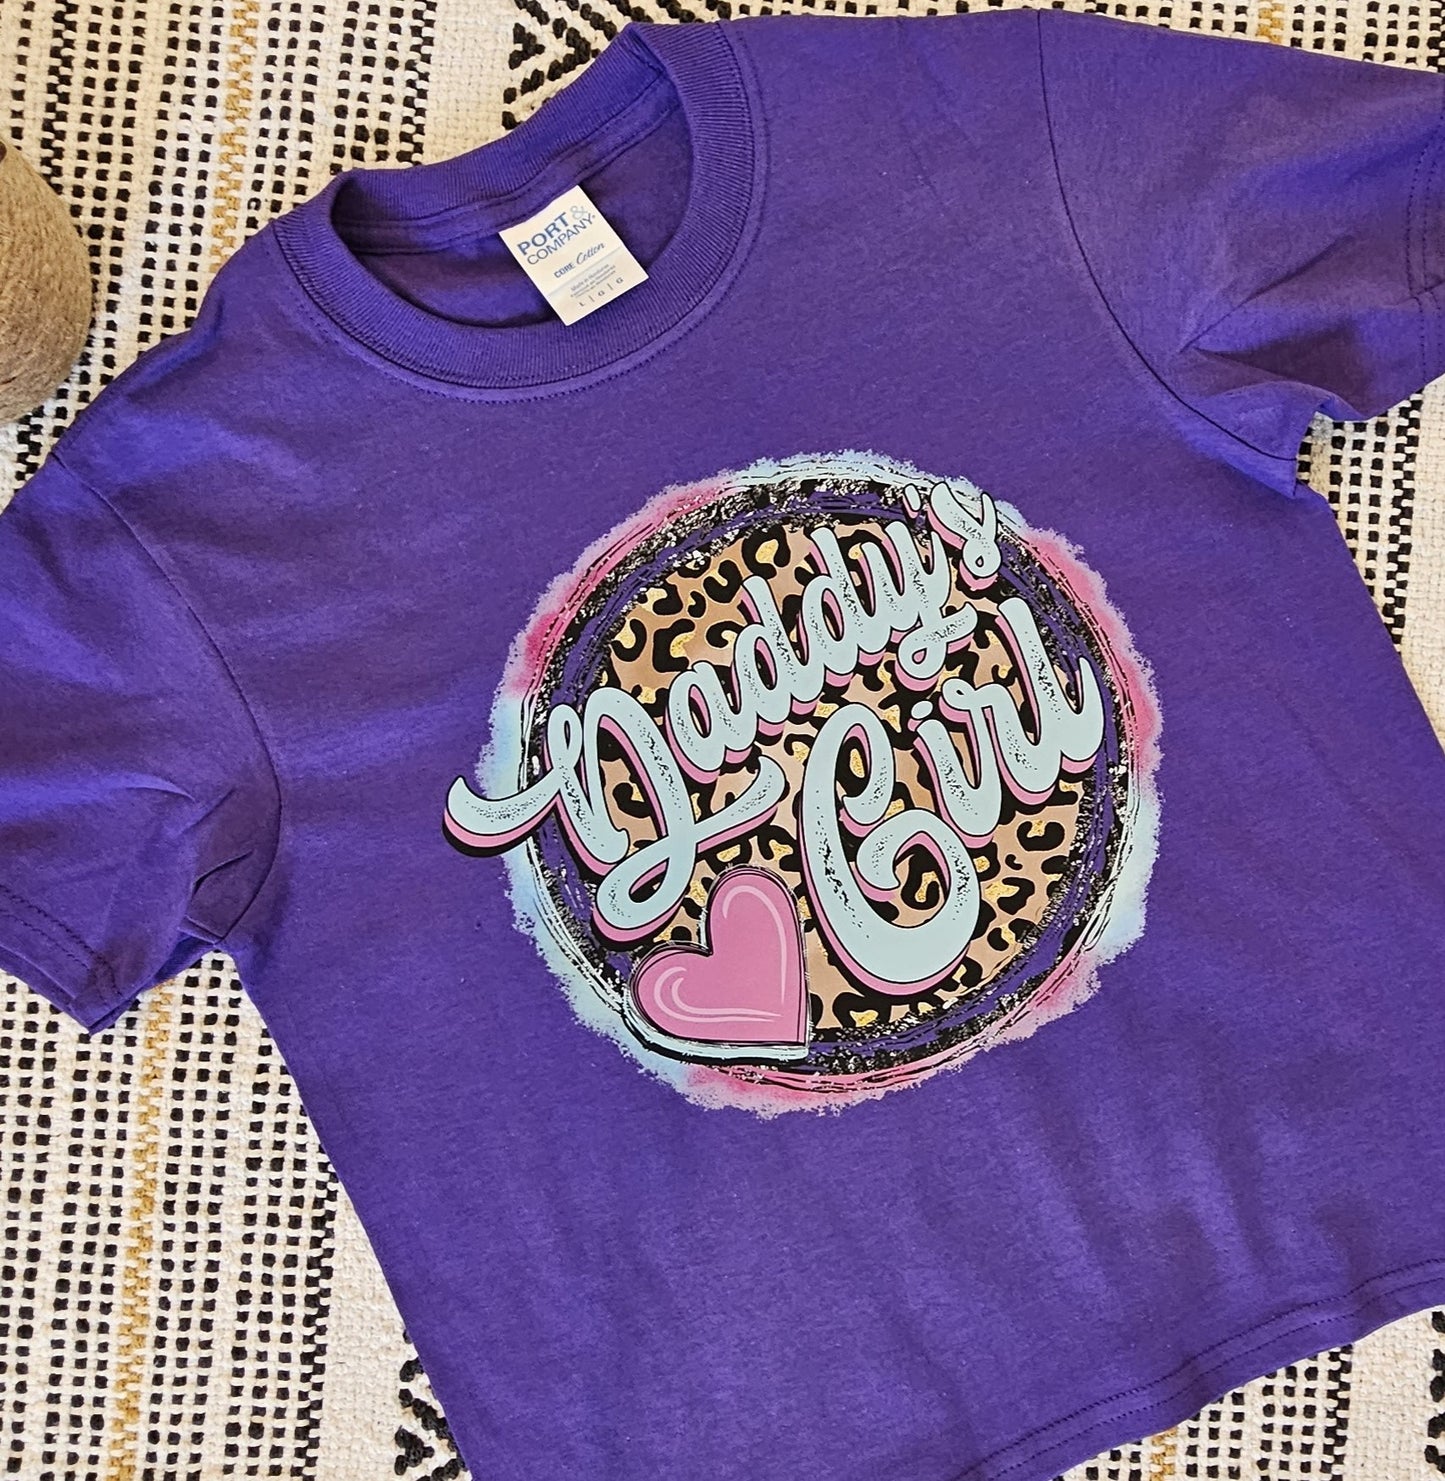 Girl's T-Shirt - Daddy's Girl Tee, Girl's Purple T-Shirt